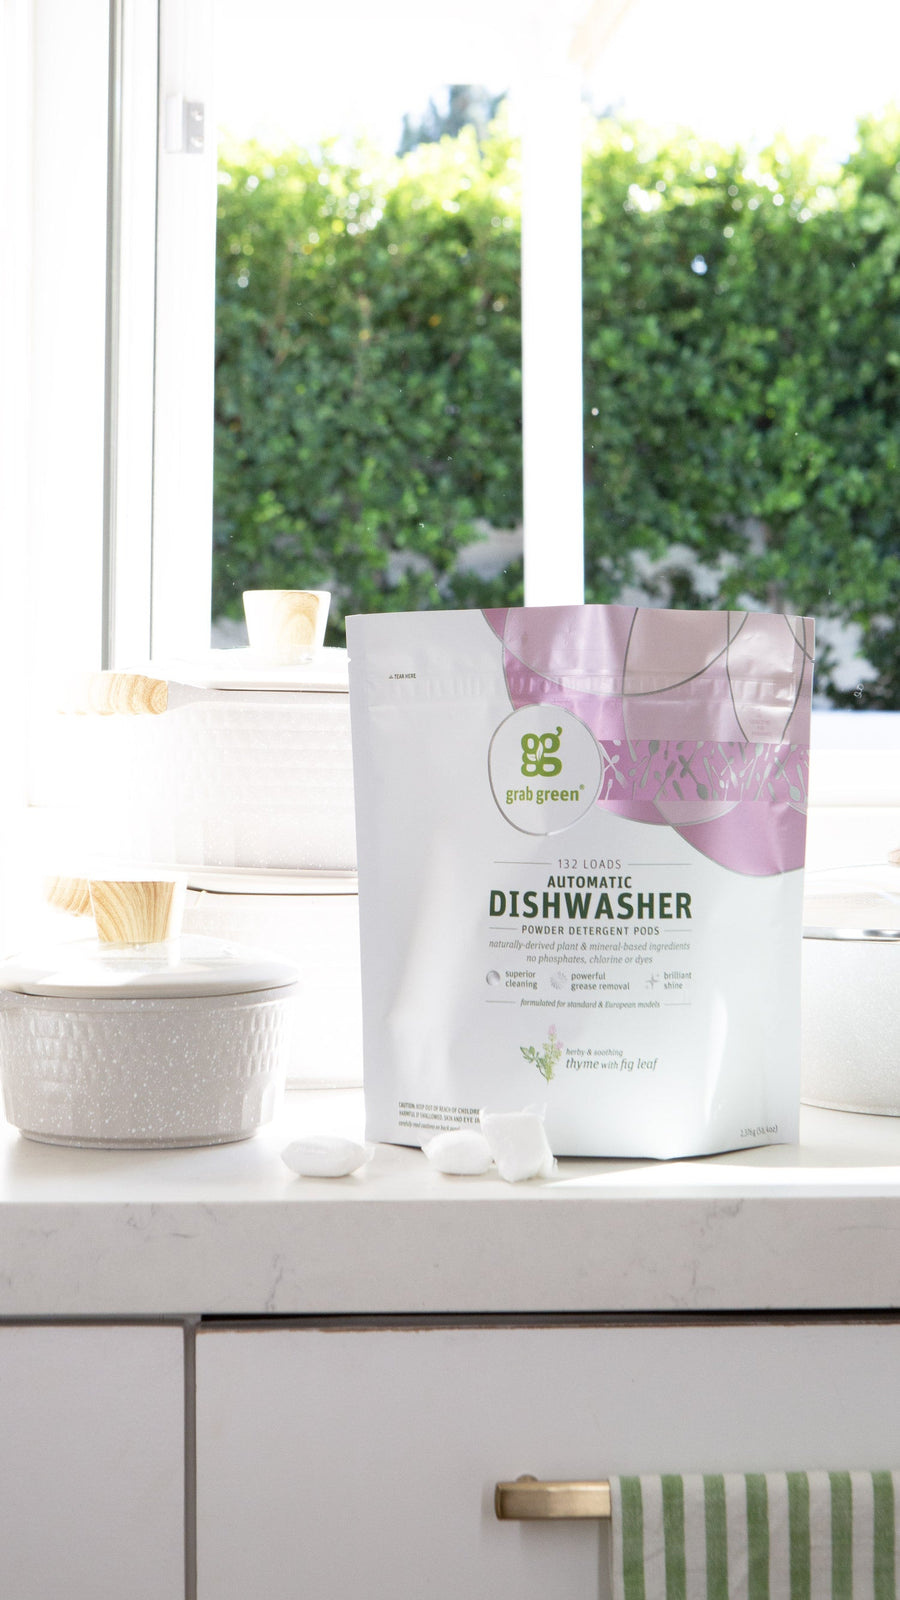 Grab Green Home: Dishwashing Detergent Pods